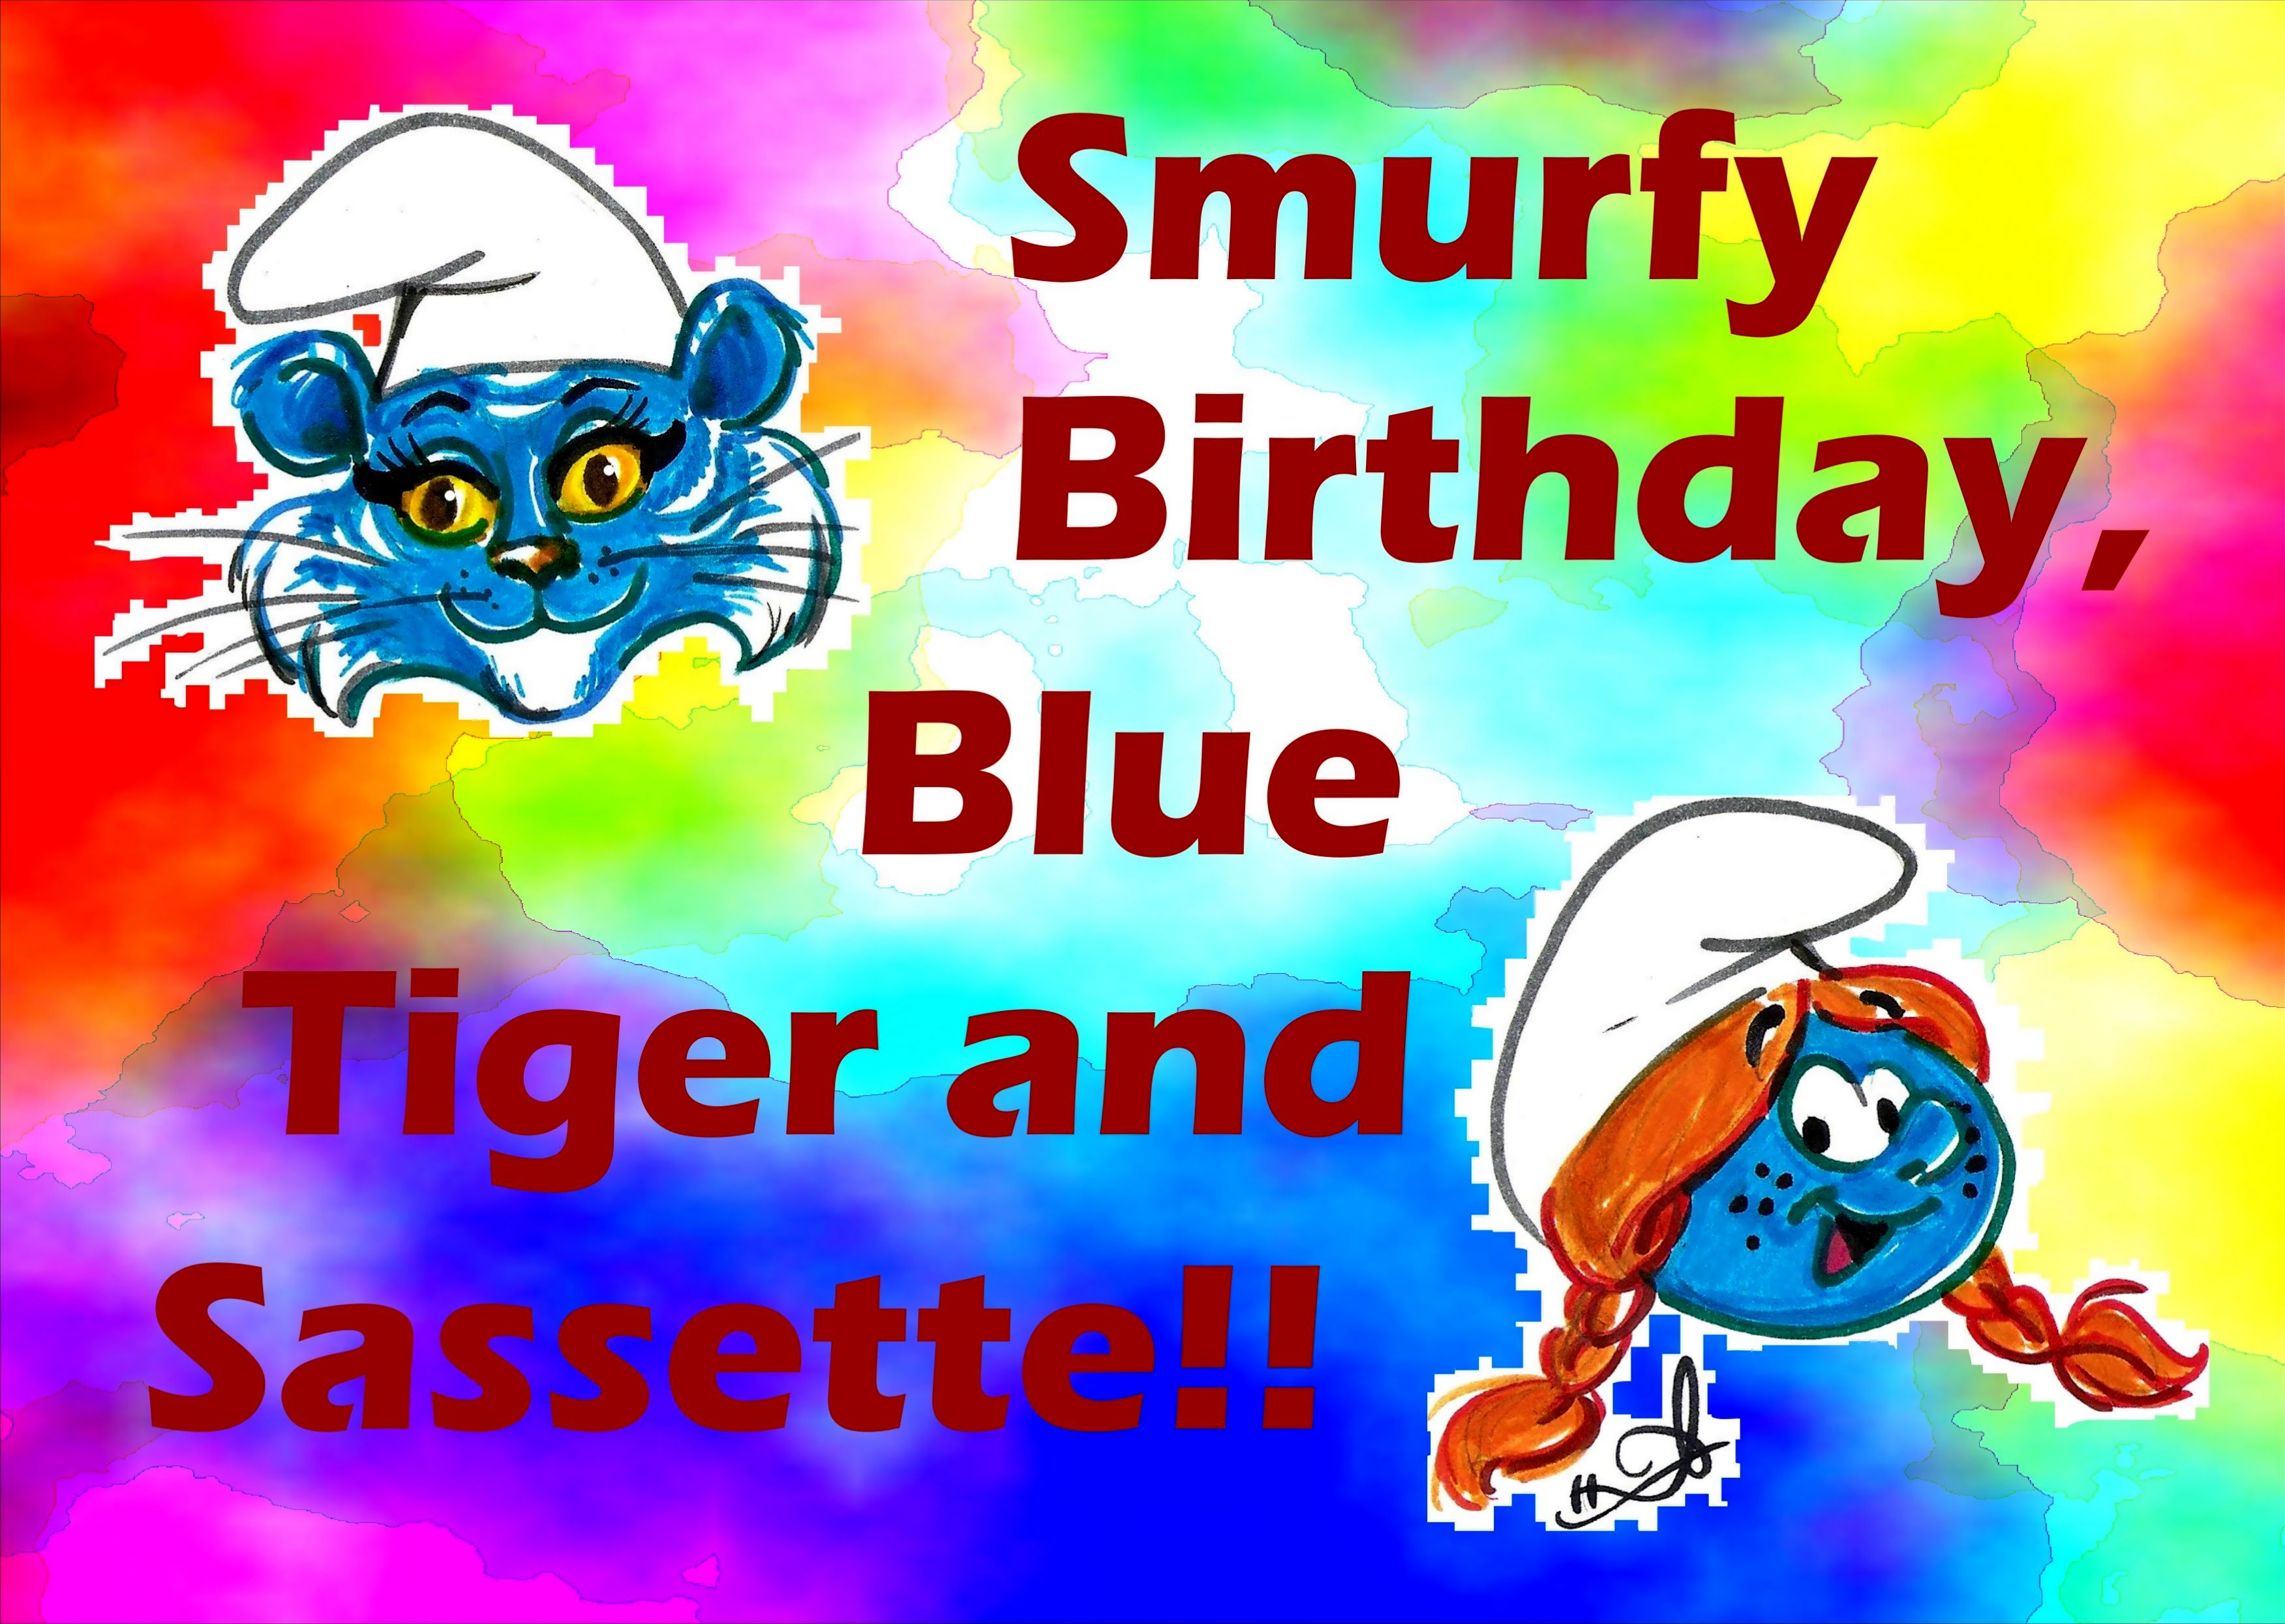 Smurf Birthday Quotes.